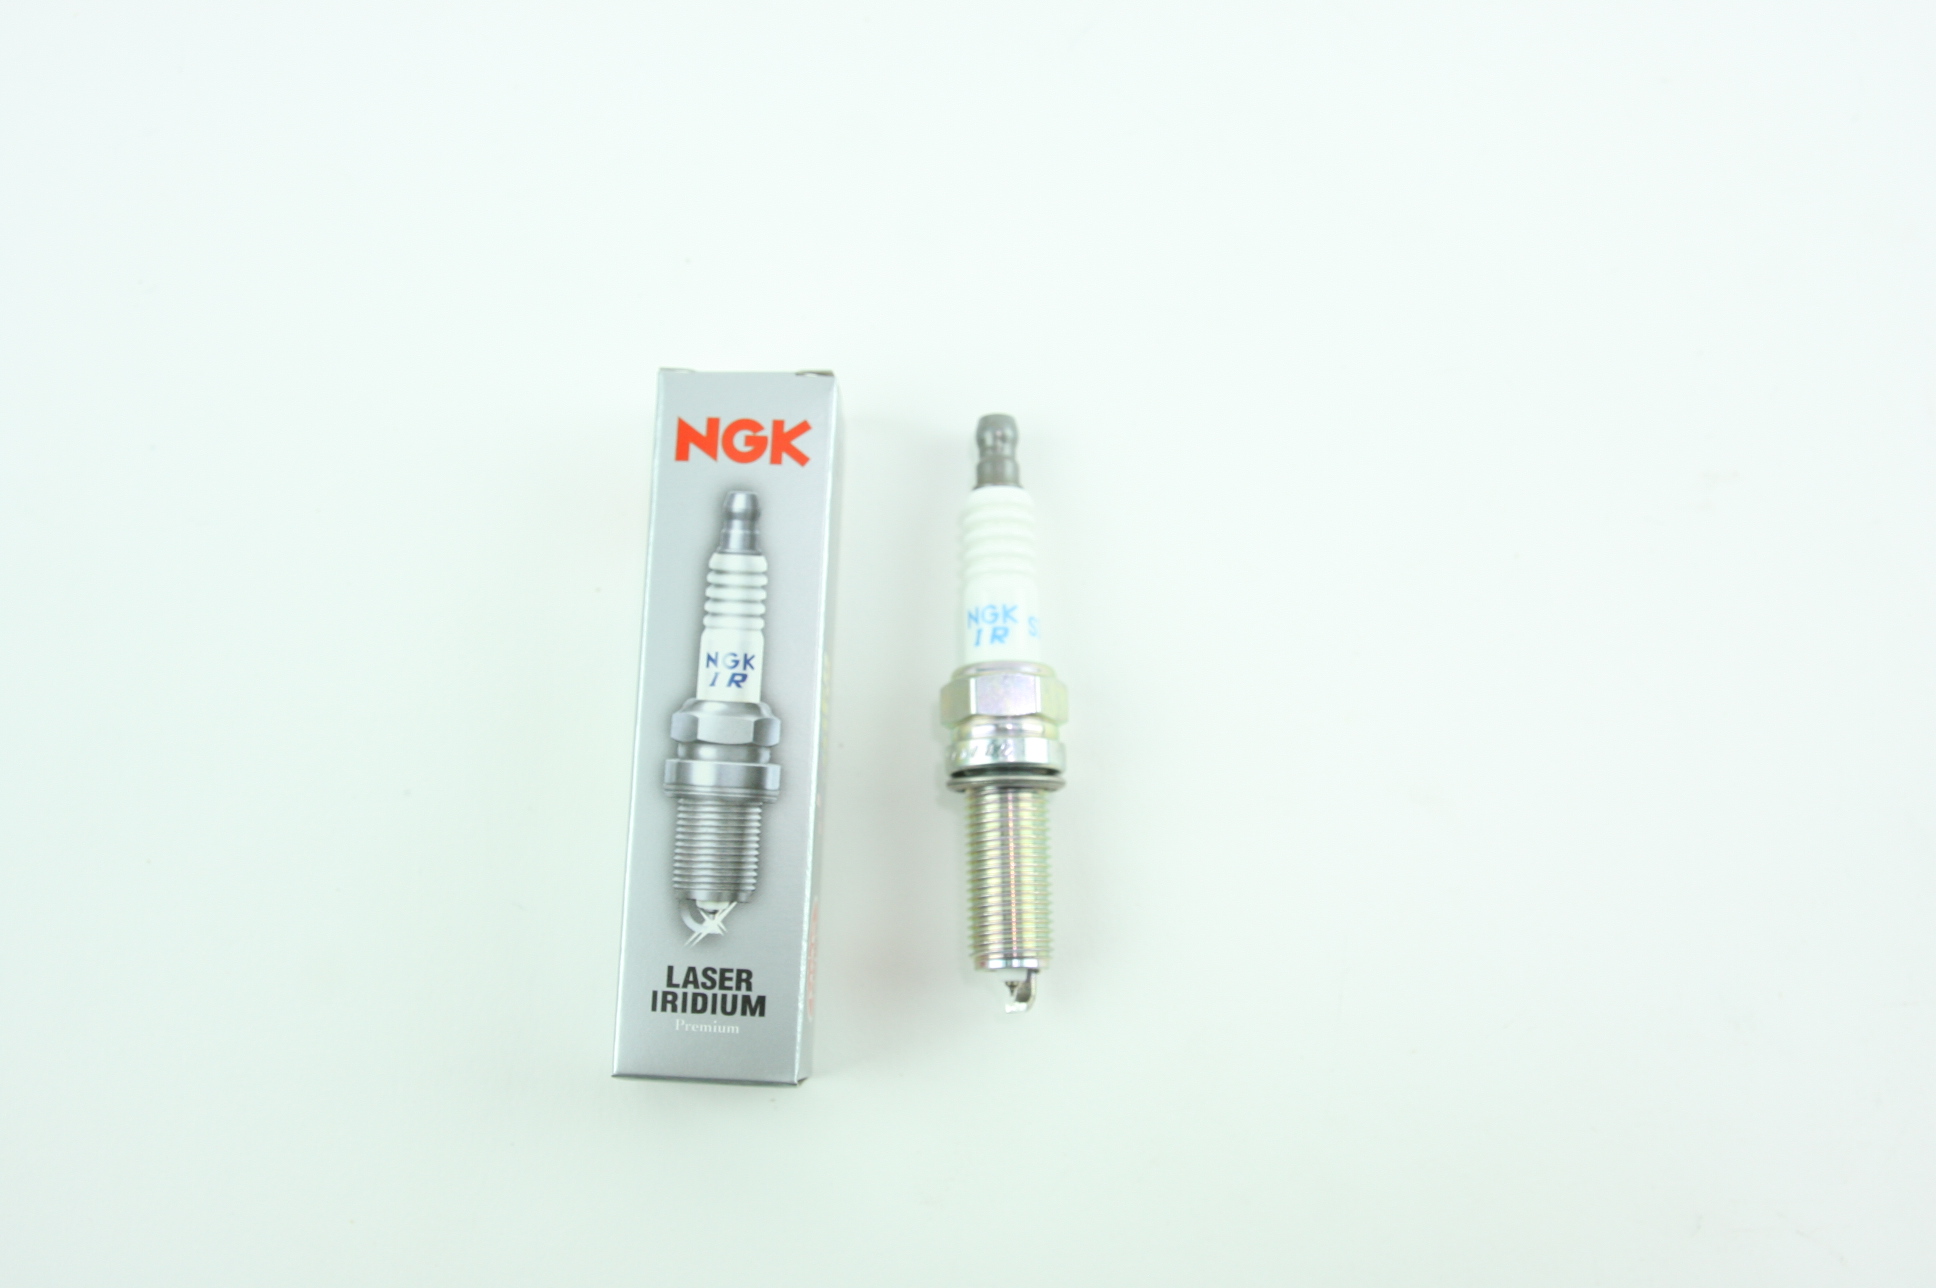 New NGK 1402 Spark Plug - Laser Iridium SILKR8AS Fast Free Shipping - image 1